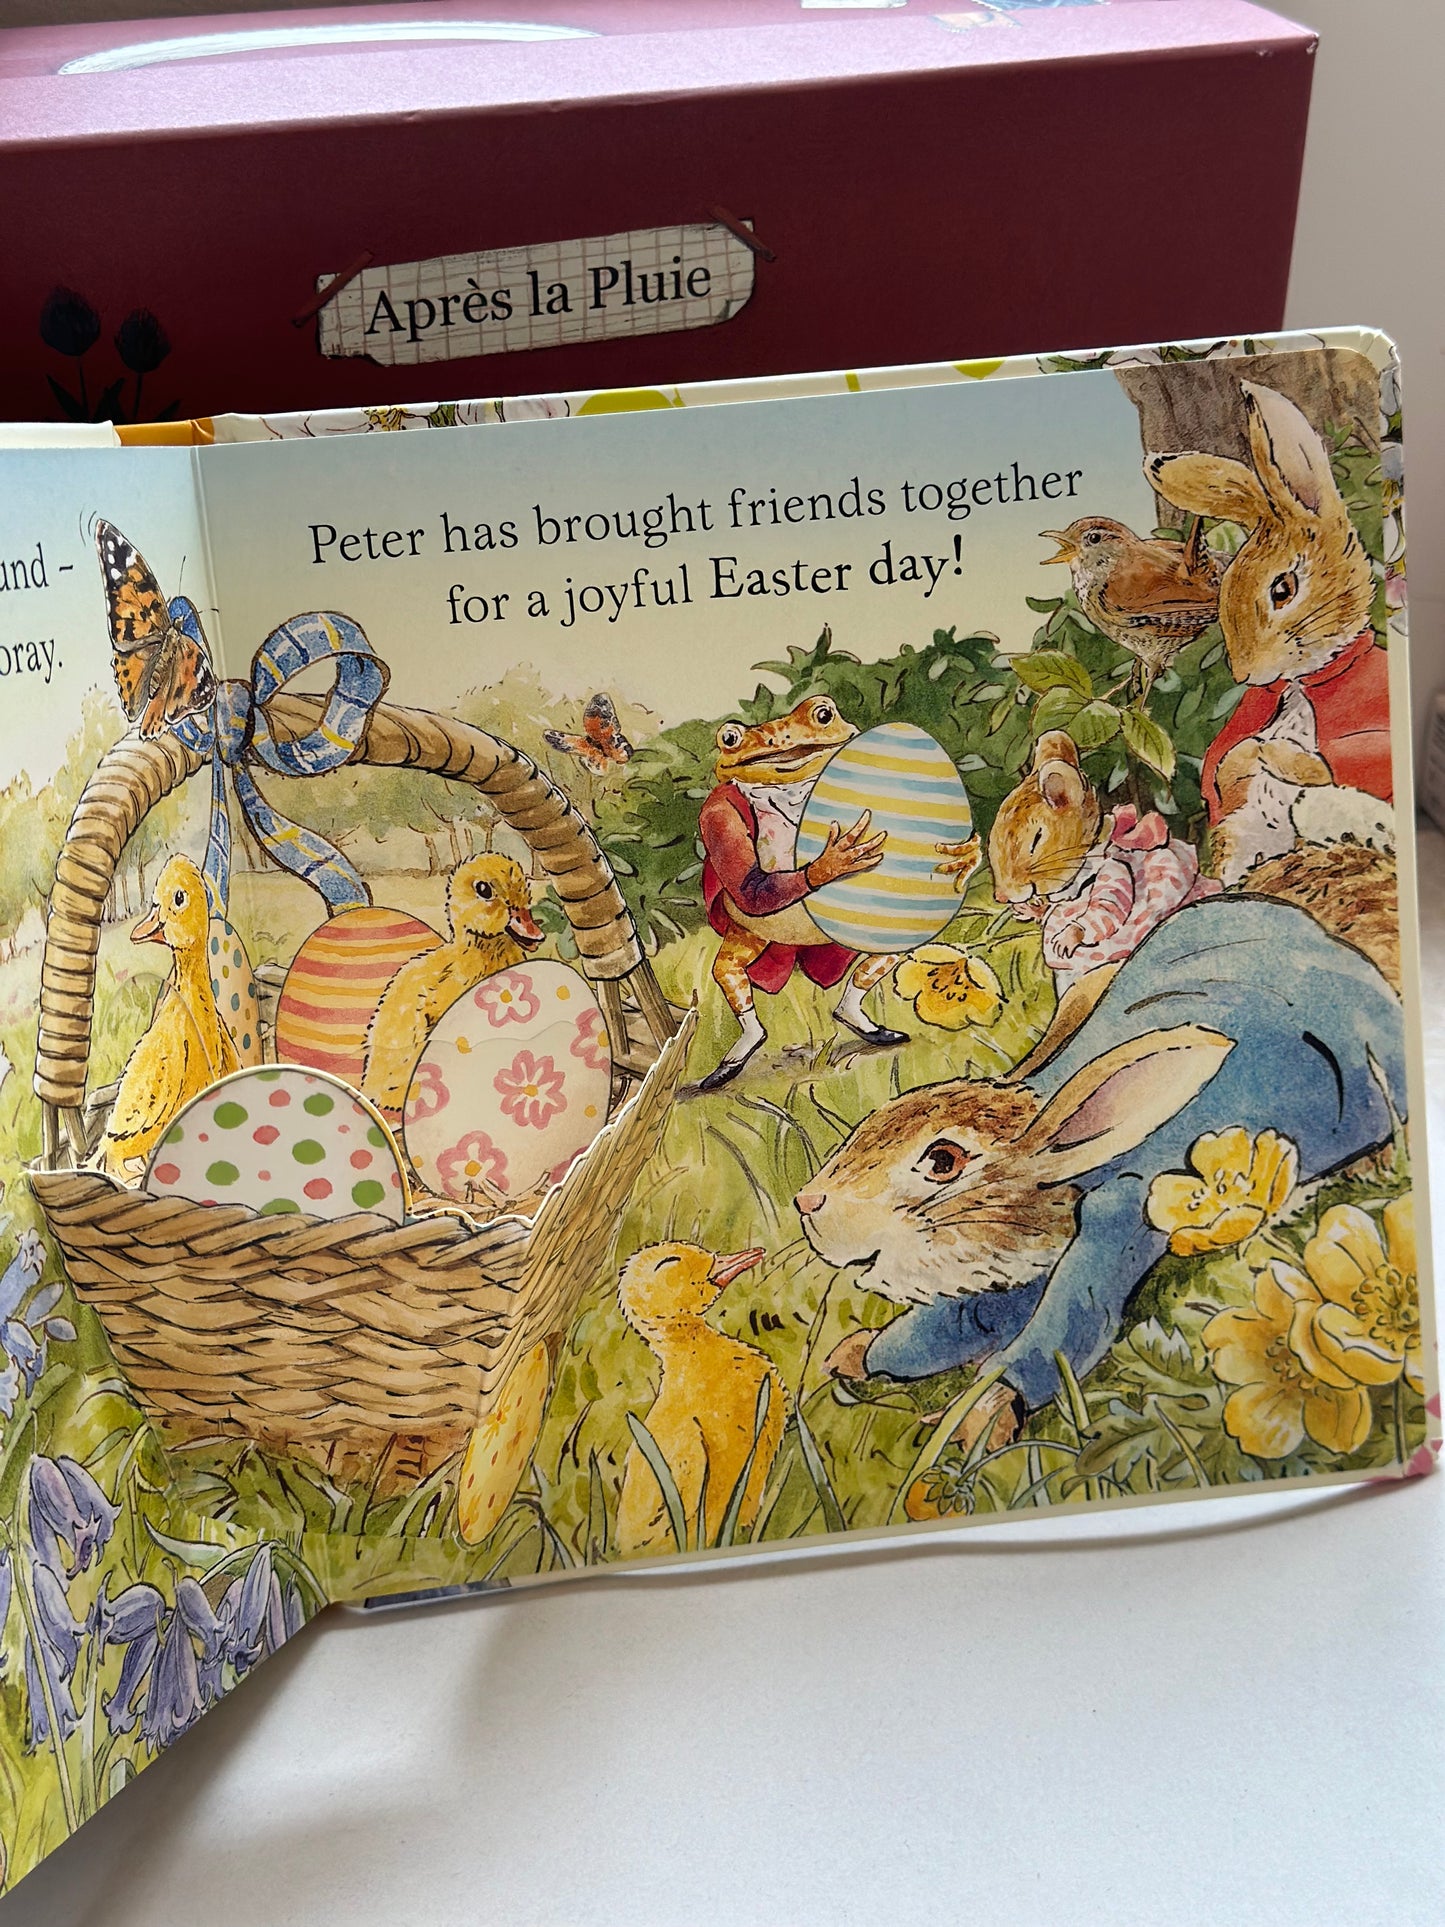 Peter Rabbit: Easter Fun A Lift the Flap Book